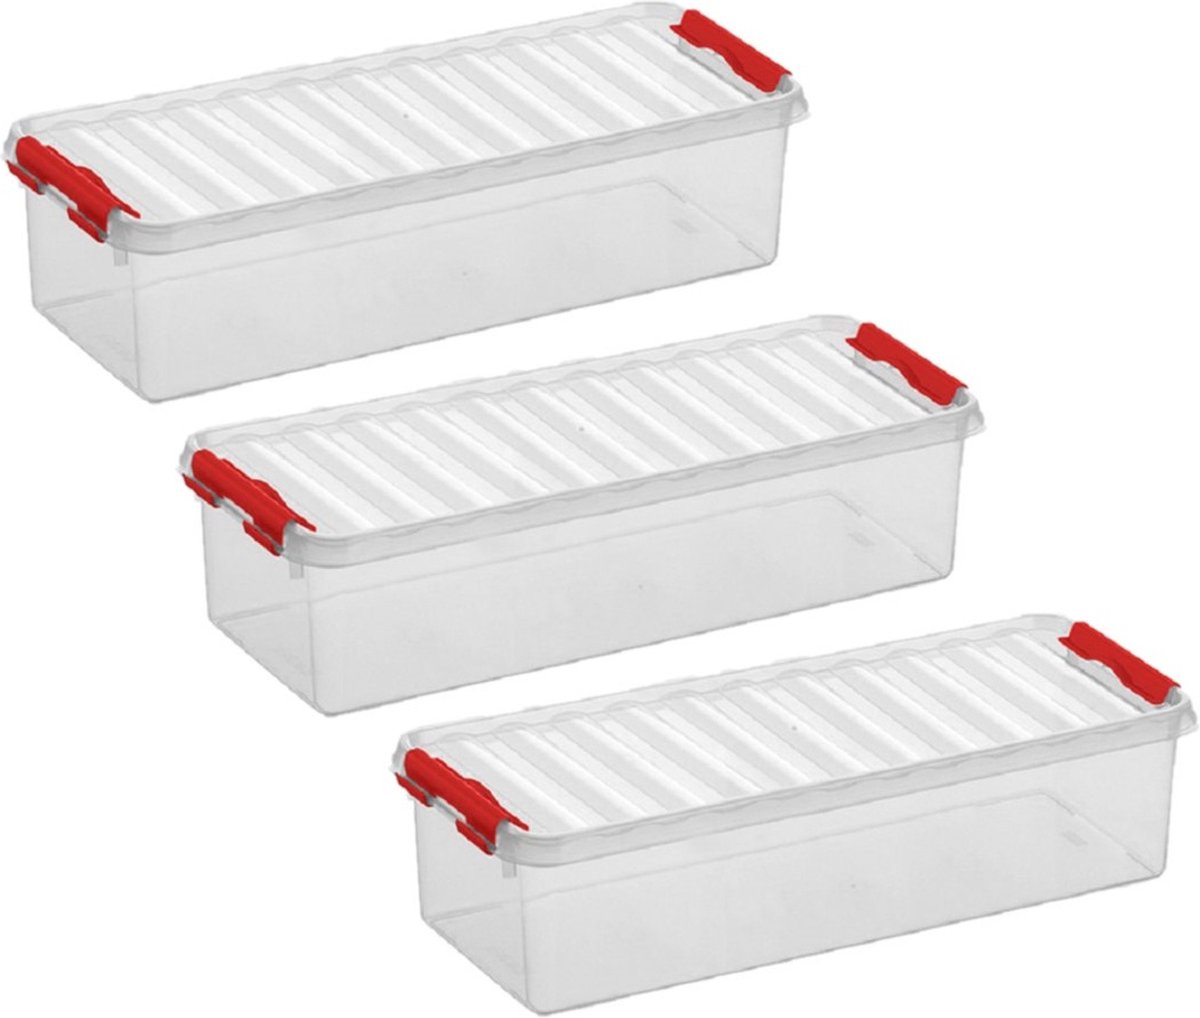 8x stuks opberg box/opbergdoos 3.5 liter 38.5 x 14 x 9.2 cm - Opslagbox - Opbergbak kunststof transparant/rood